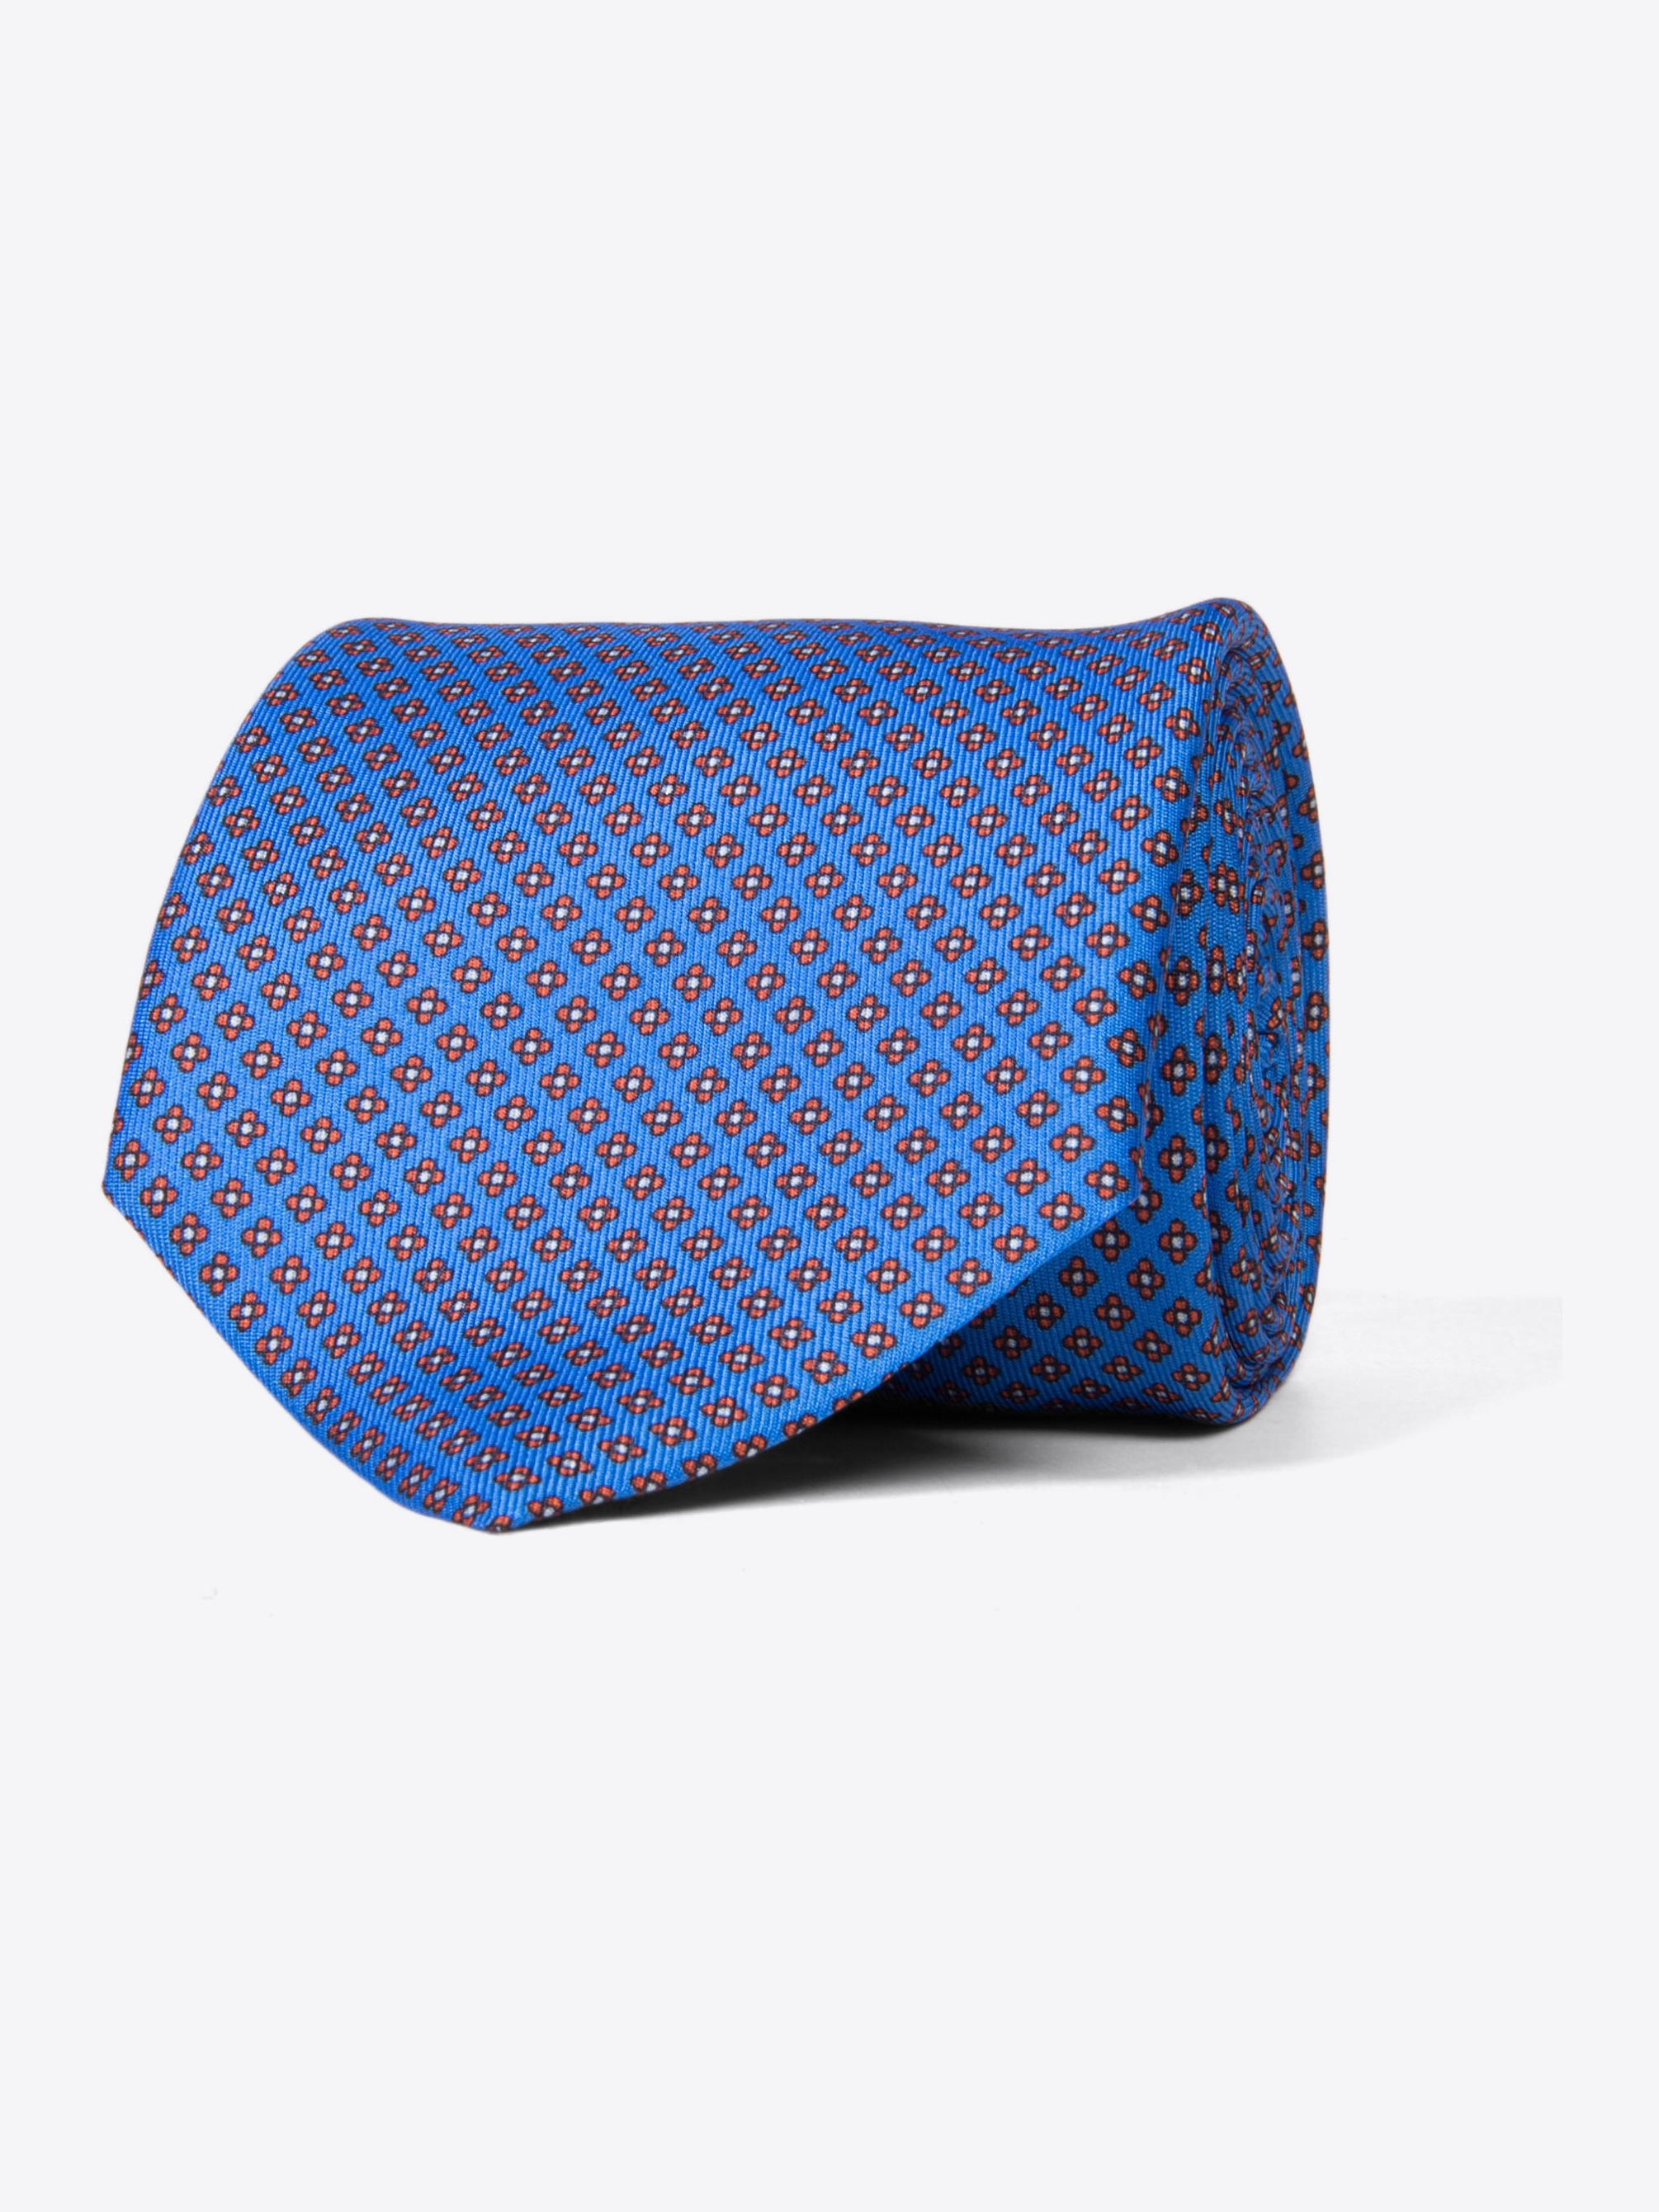 Zoom Image of Trieste Blue and Orange Foulard Tie